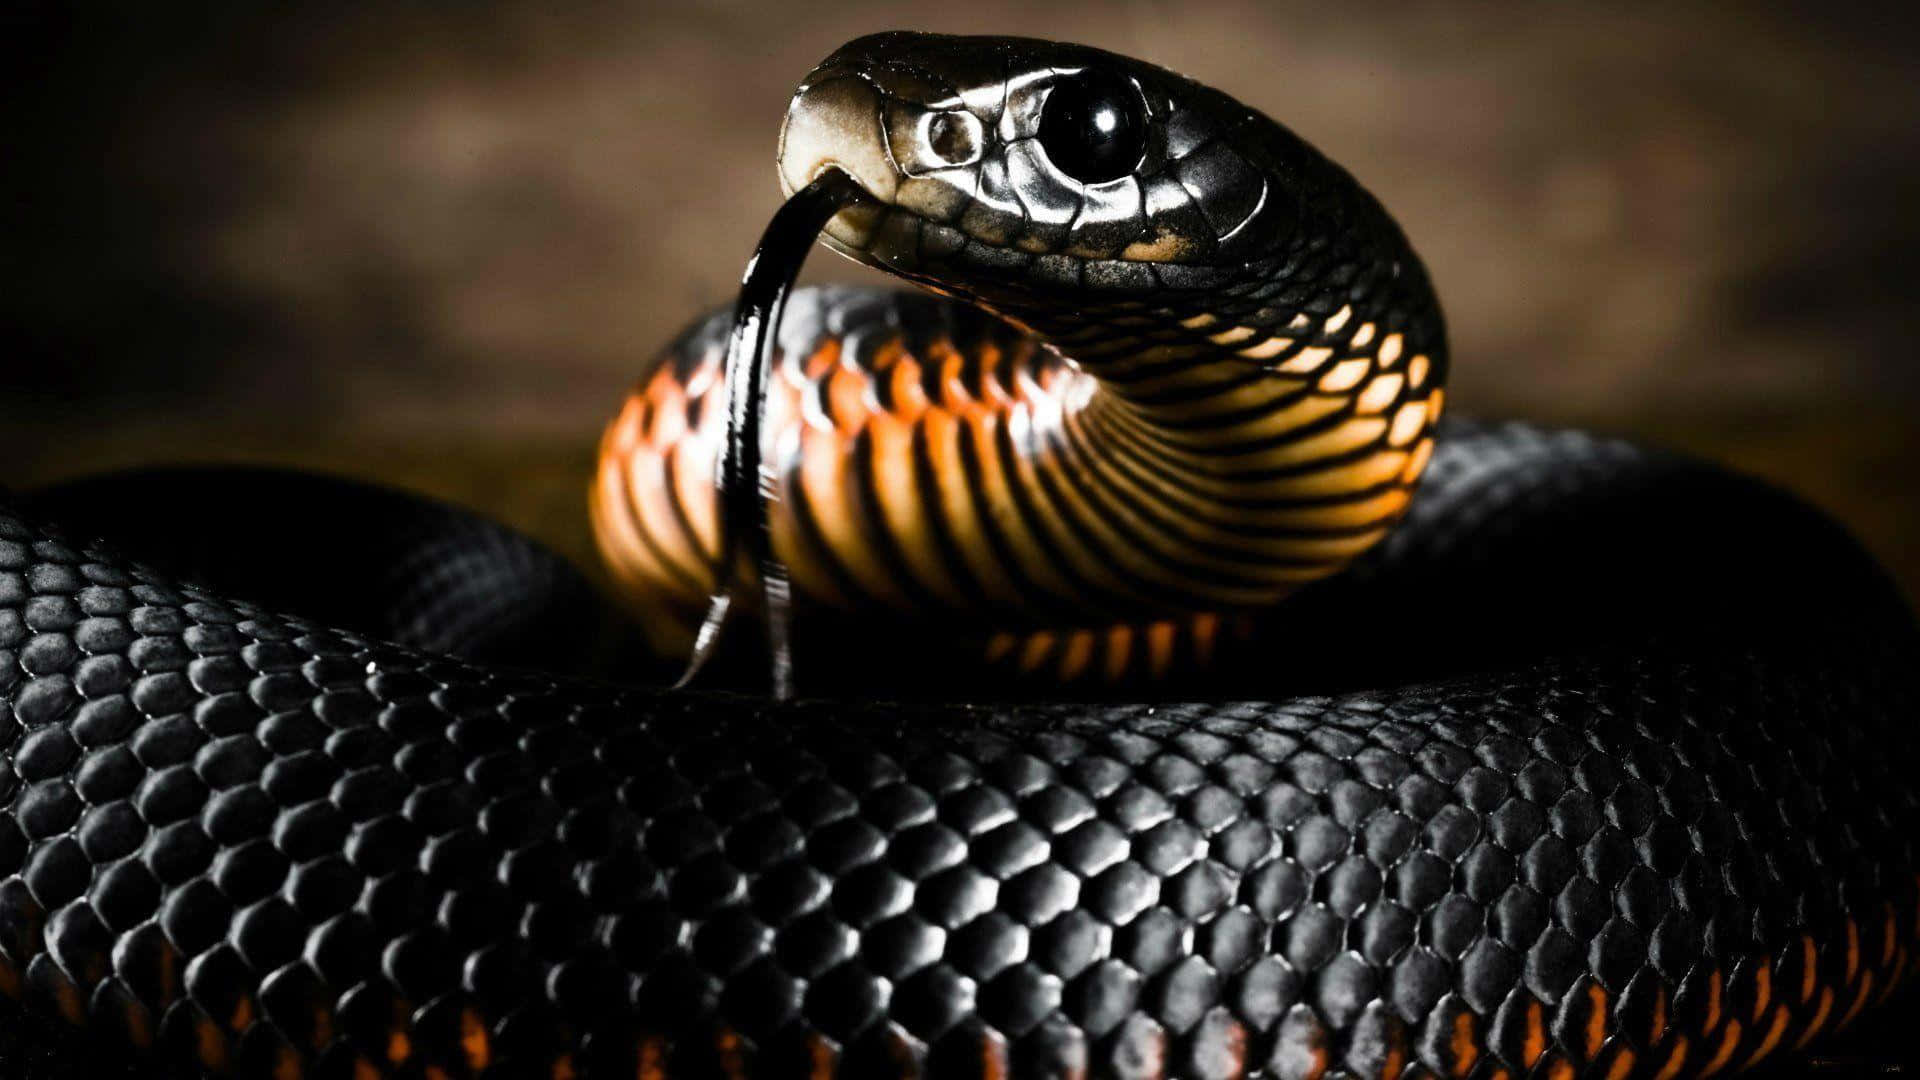 Unavista De Cerca De Una Majestuosa Serpiente Cobra.